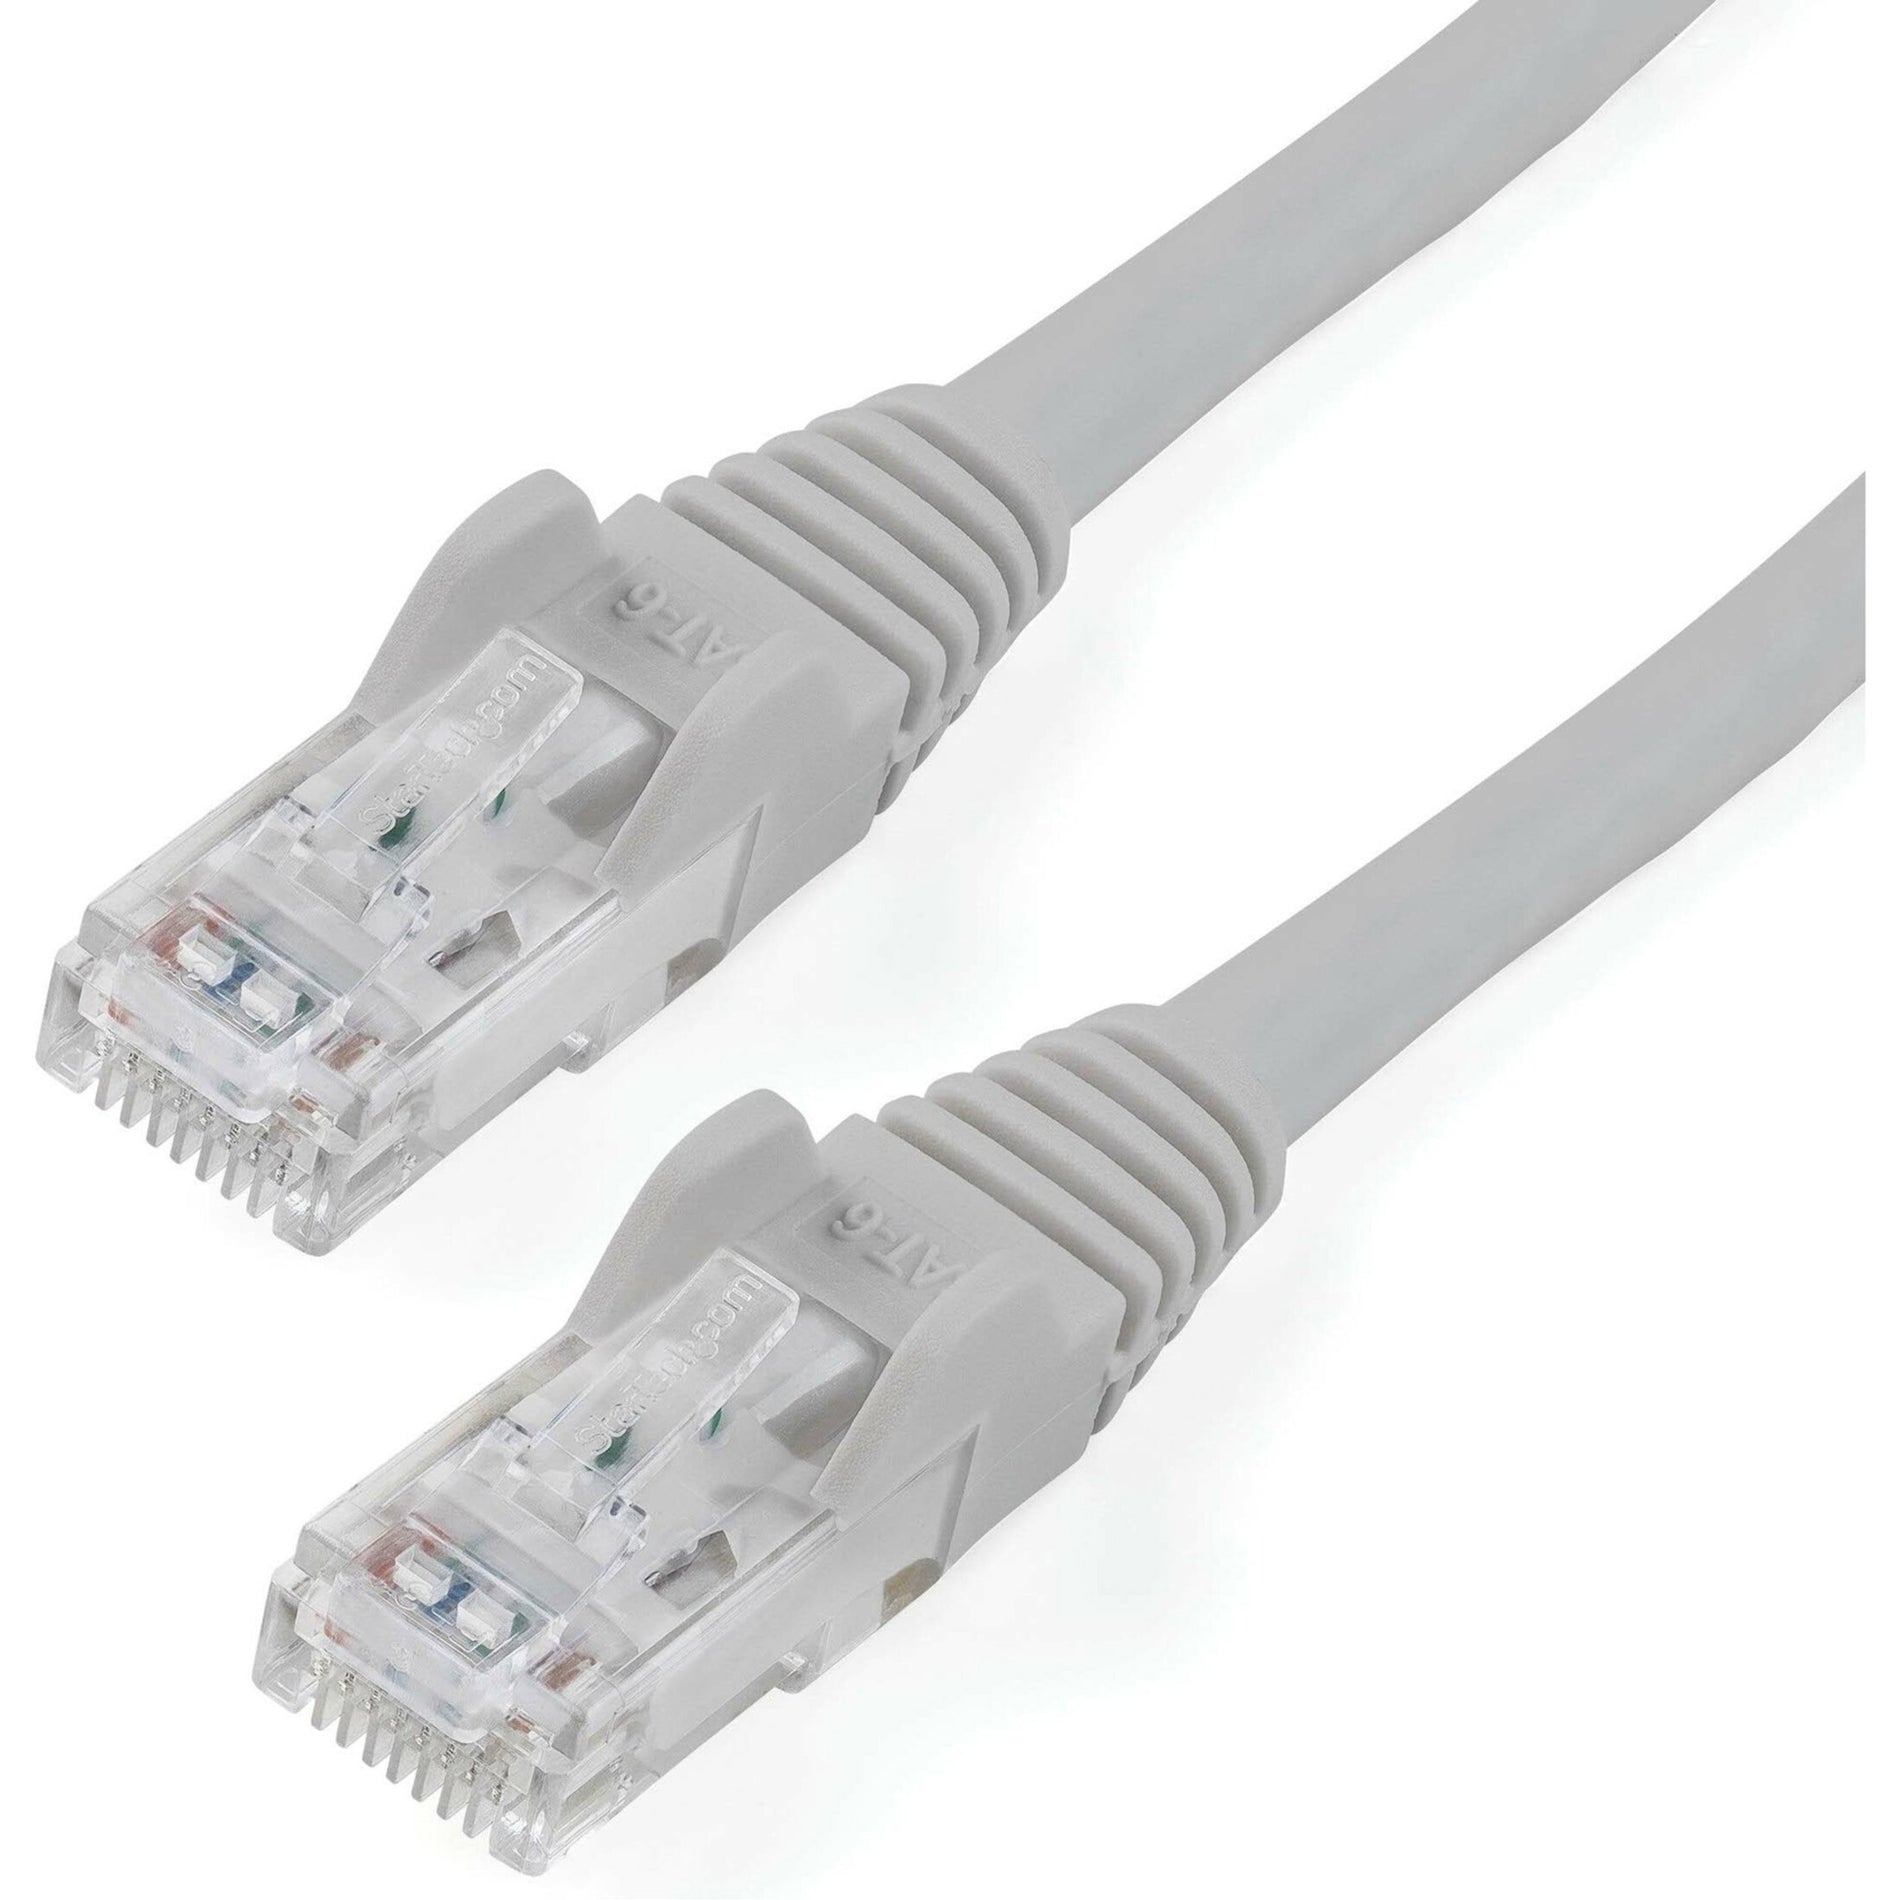 StarTech.com N6PATCH4GR Cat6 Patch Cable 4ft Gray Ethernet Cable Snagless RJ45 Connectors